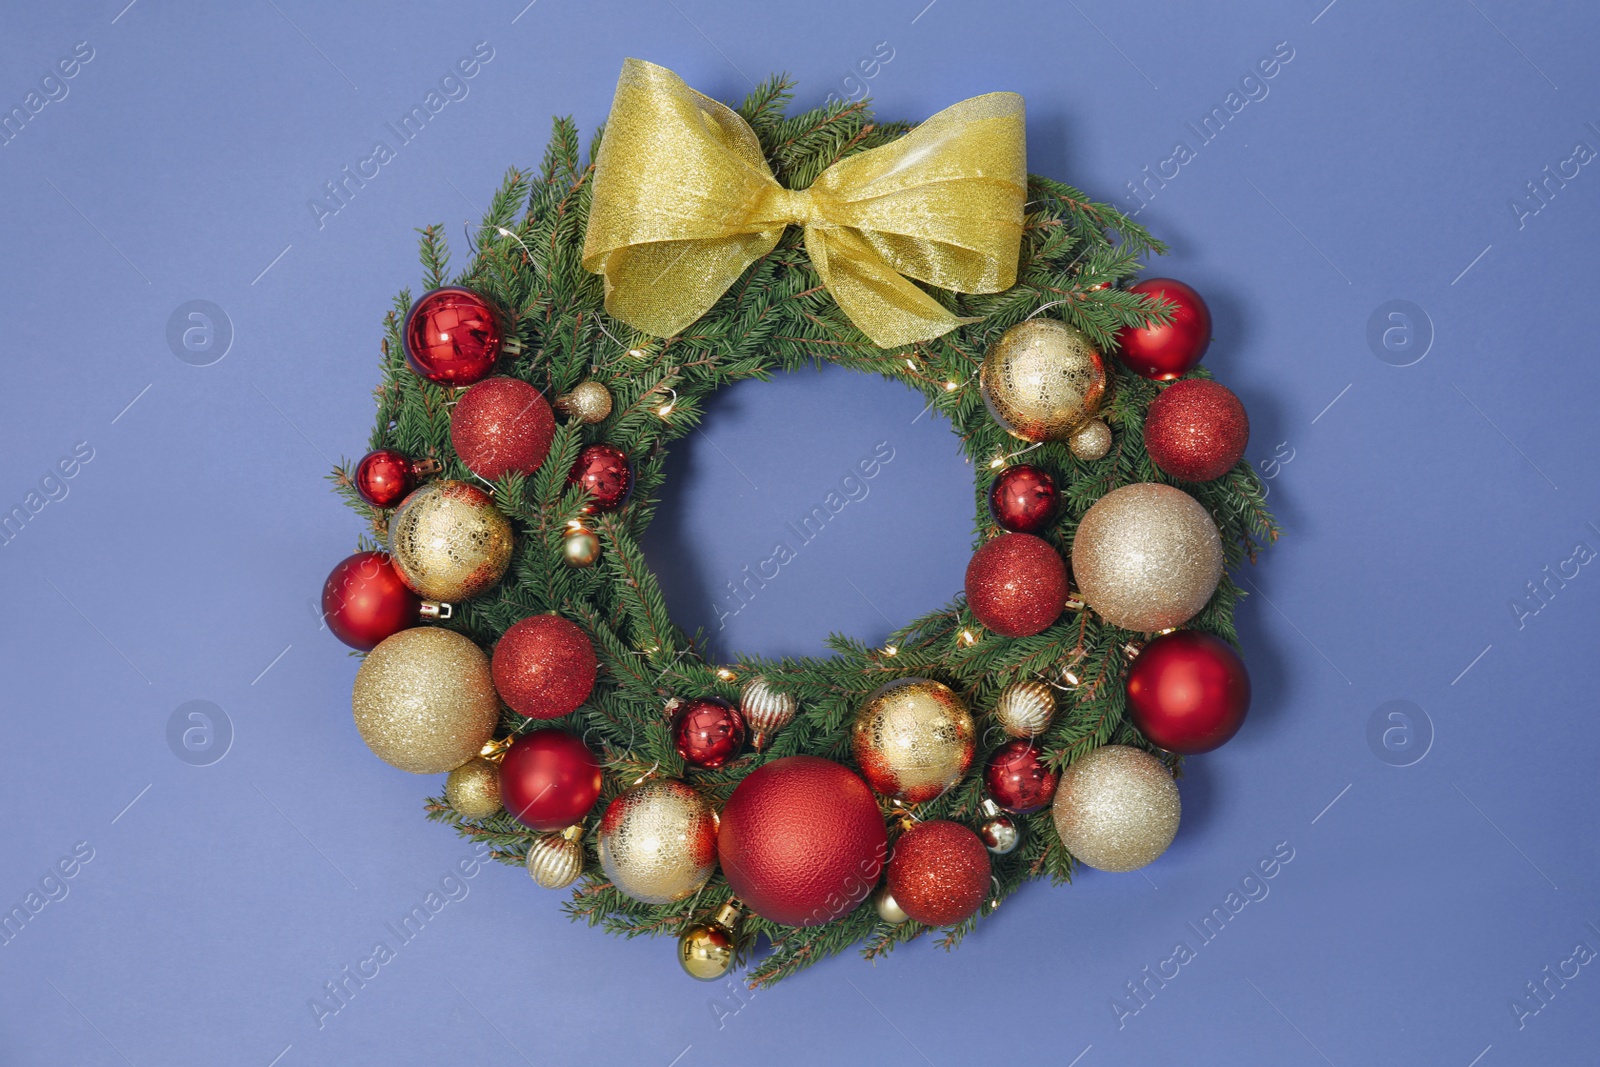 Photo of Beautiful Christmas wreath with festive decor on blue background